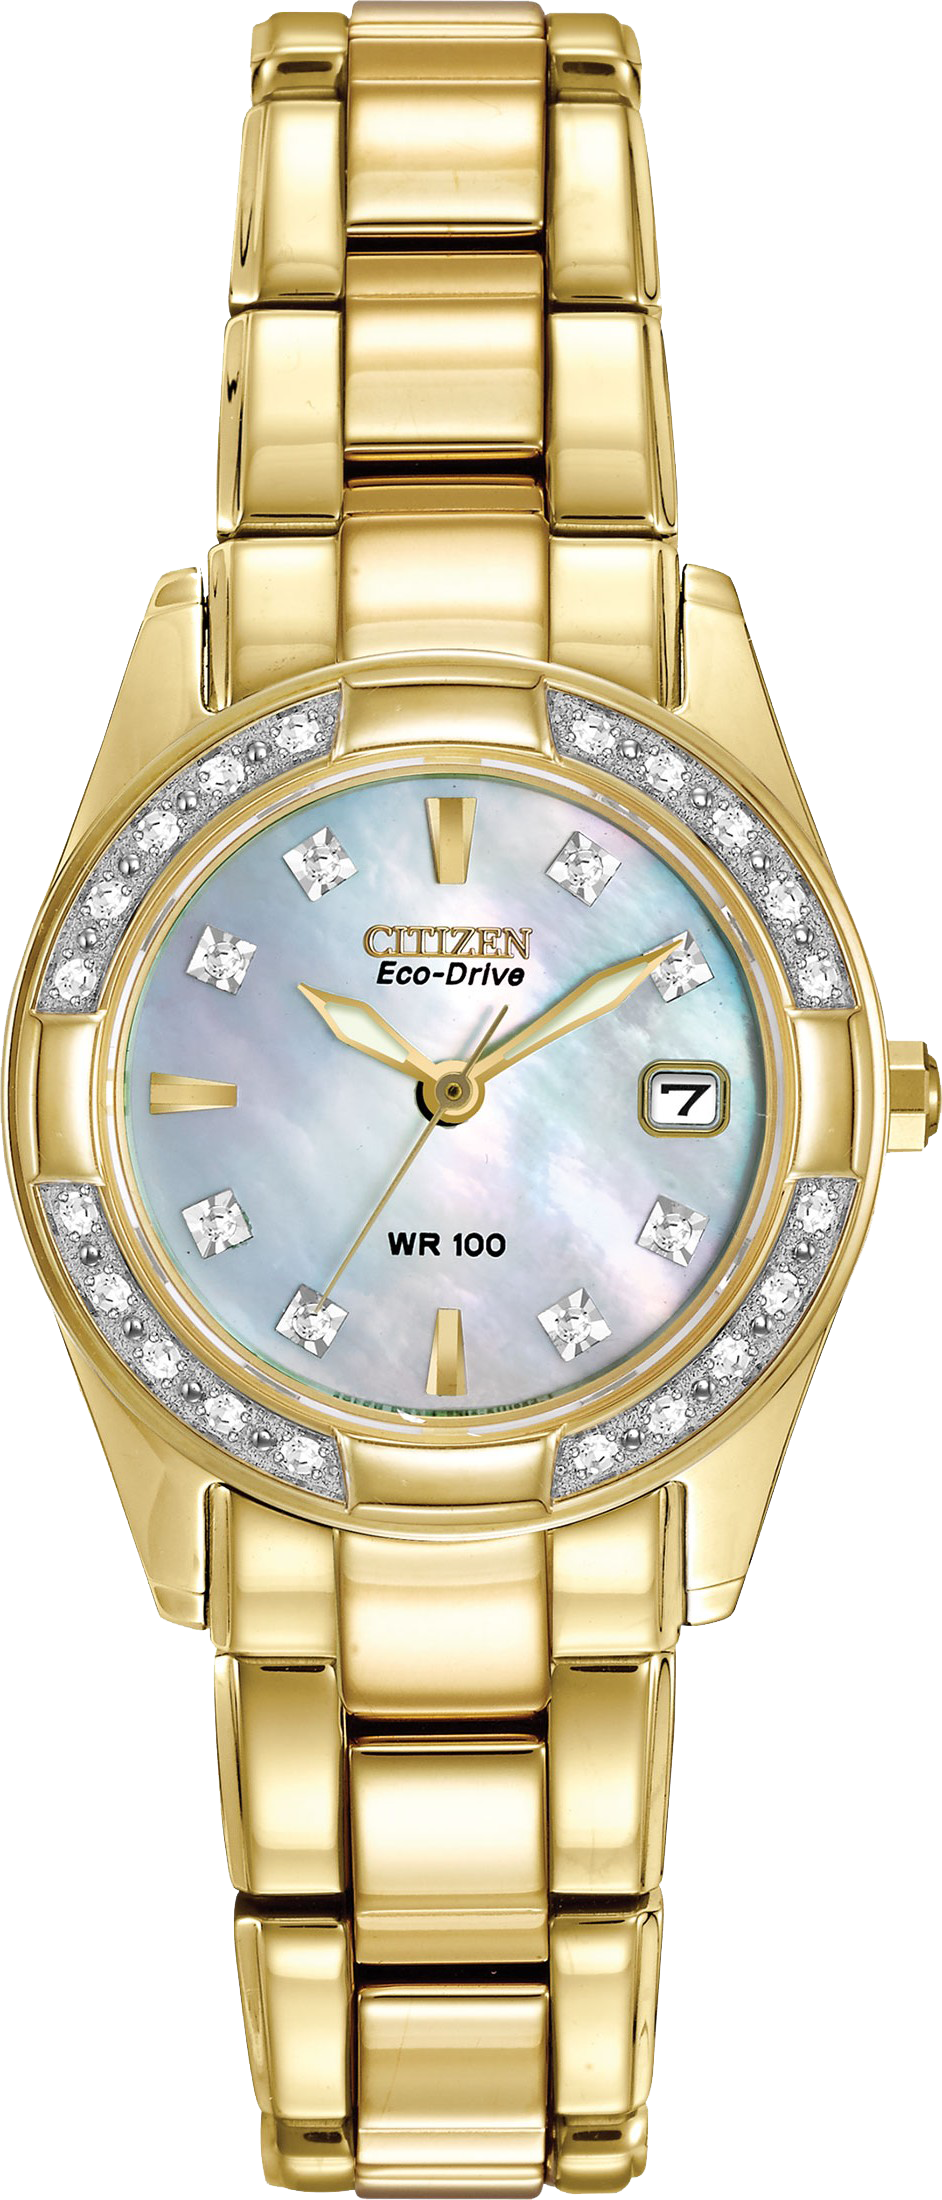 CITIZEN EW1822-52D ECO-DRIVE Women's Diamond Watch, 26mm